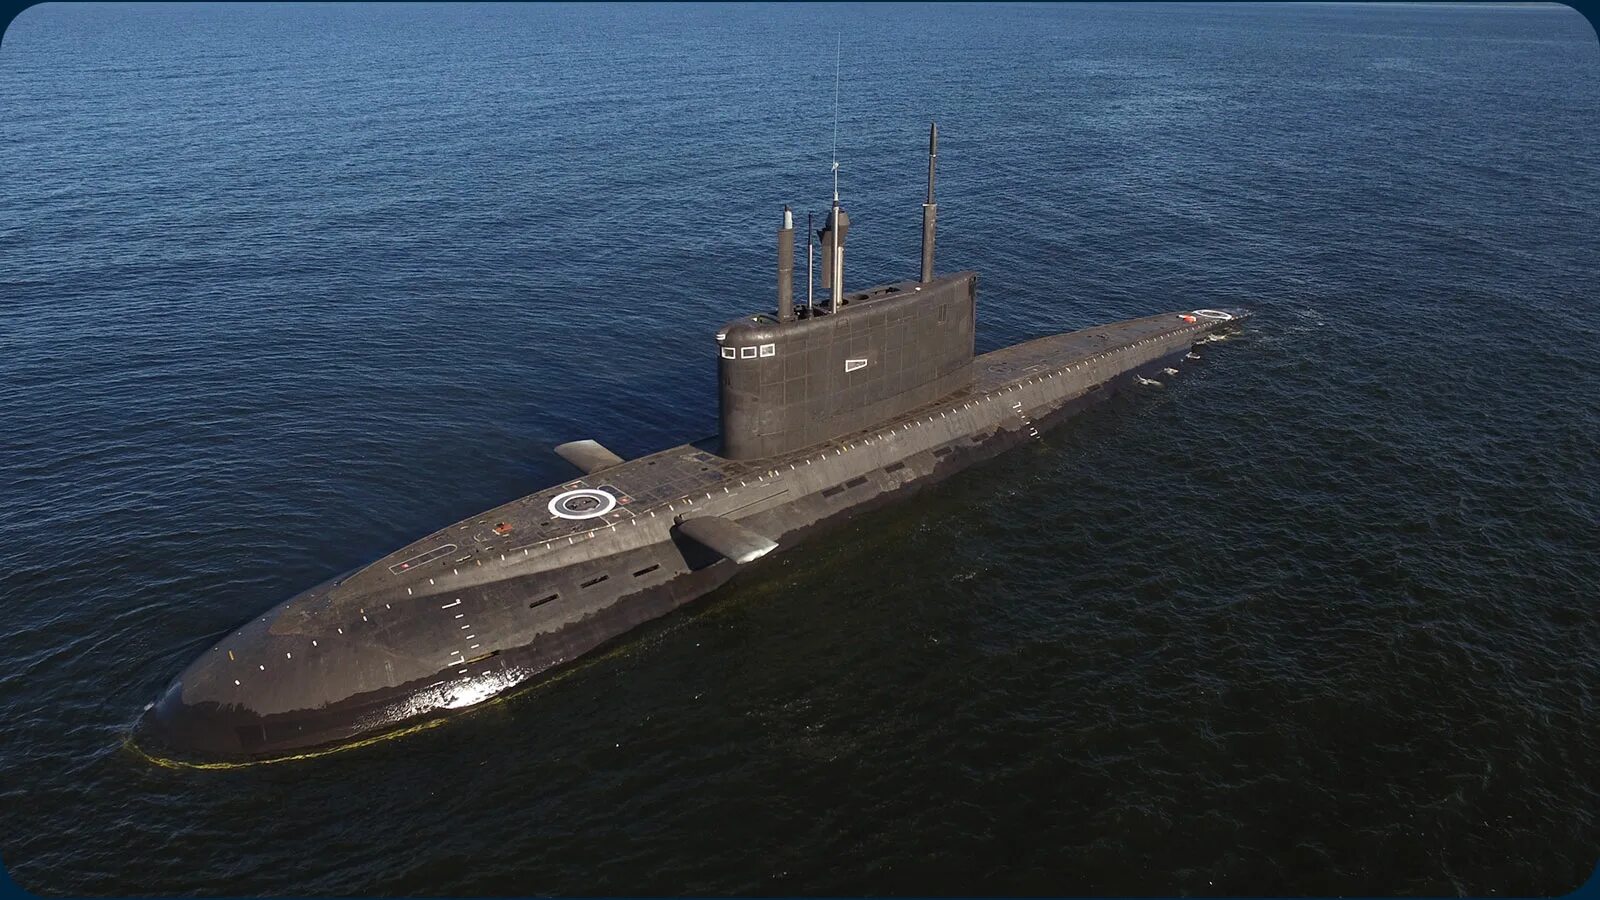 New sub. 636.3 Подводная лодка. Подводной лодки проекта 636.3. Проект 636.3 Волхов. ДПЛ проекта 636.3 Варшавянка.